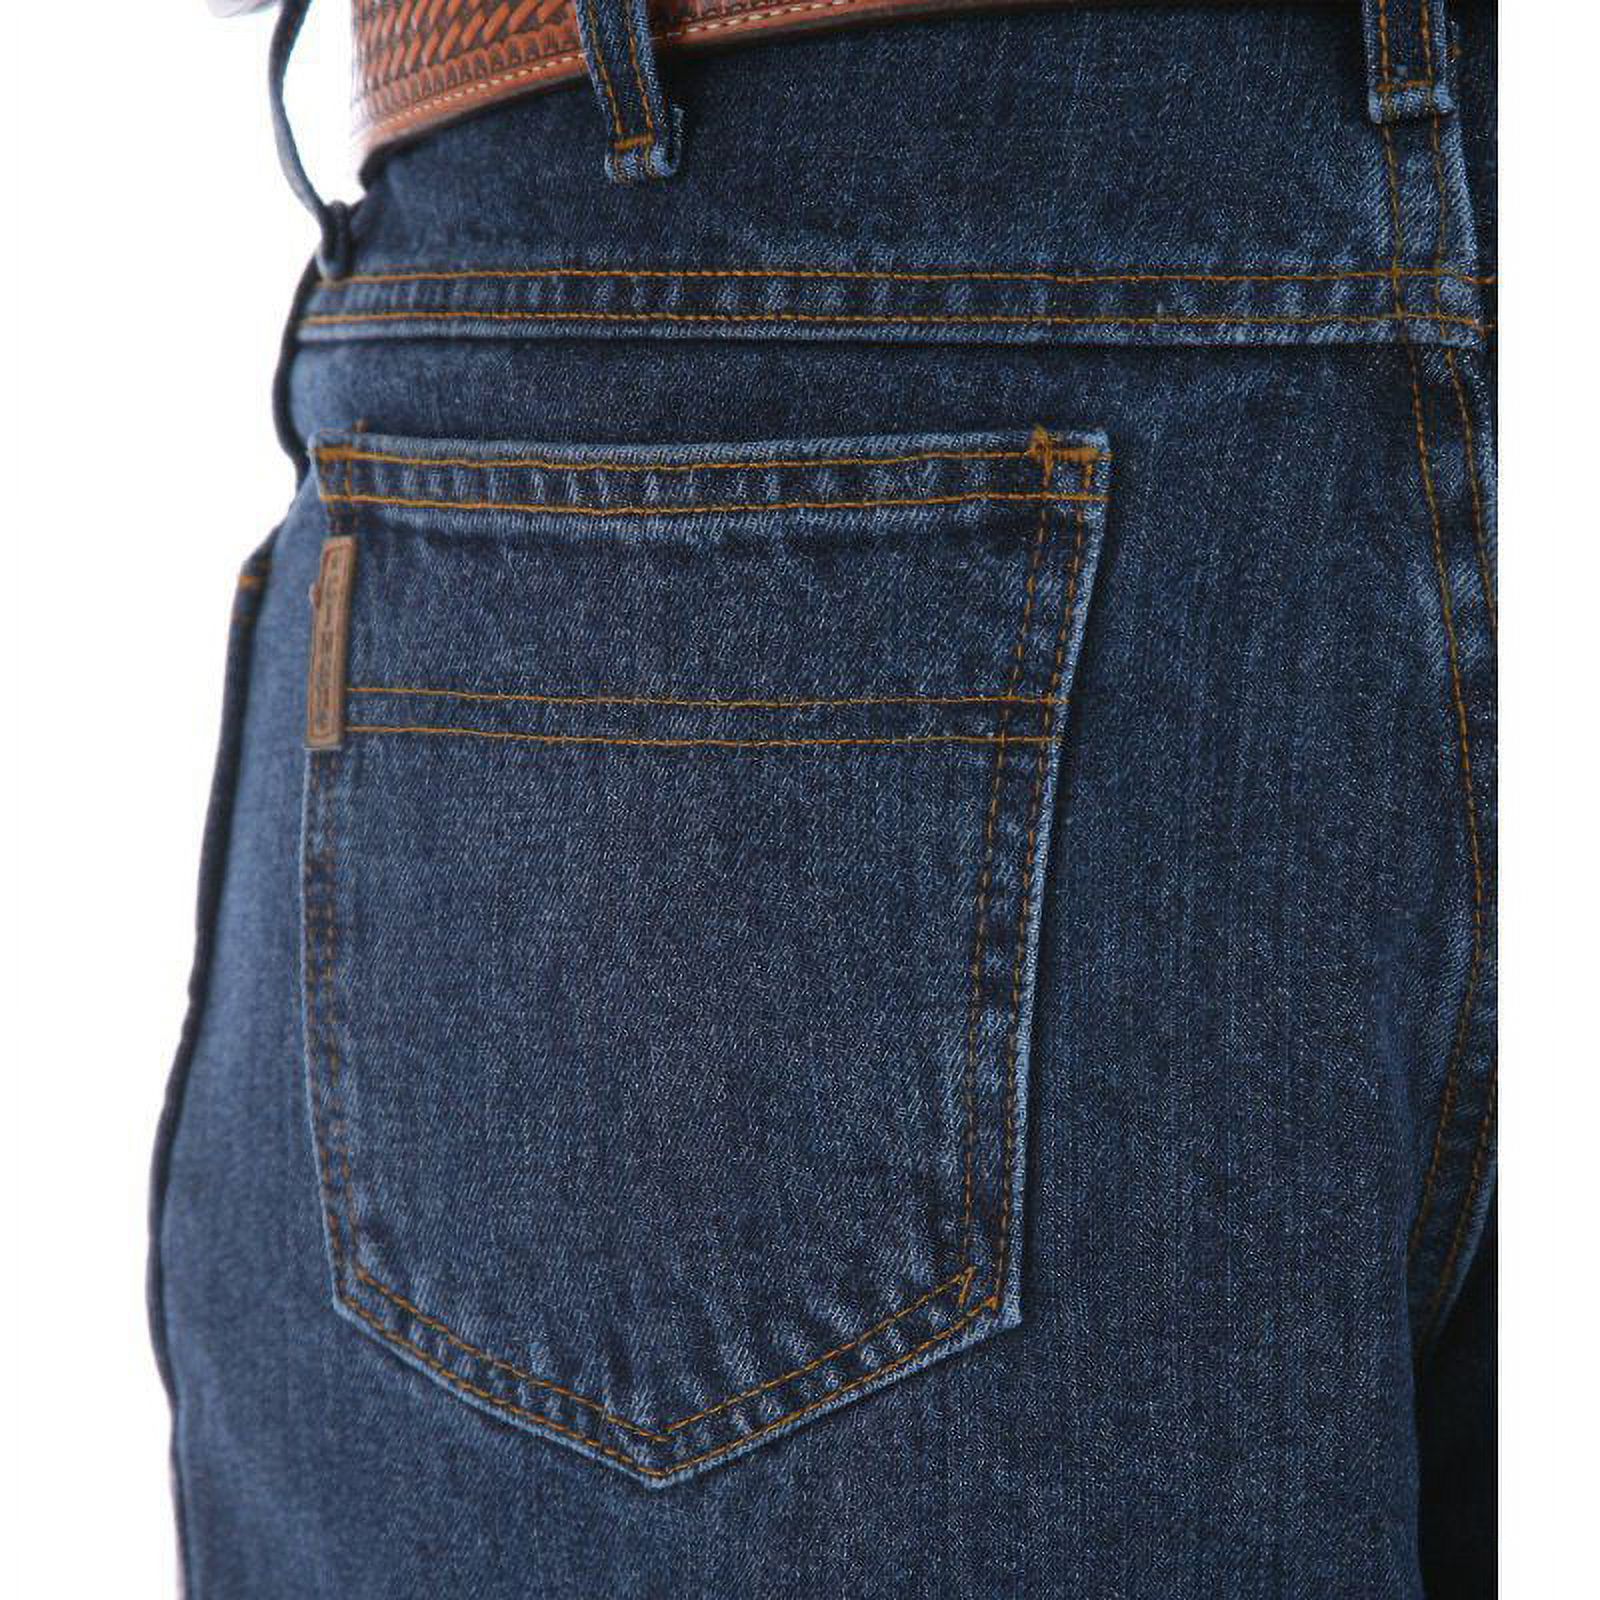 Cinch Apparel Mens Green Label Original Fit Jeans 46x38 Dark Stonewash - image 3 of 4